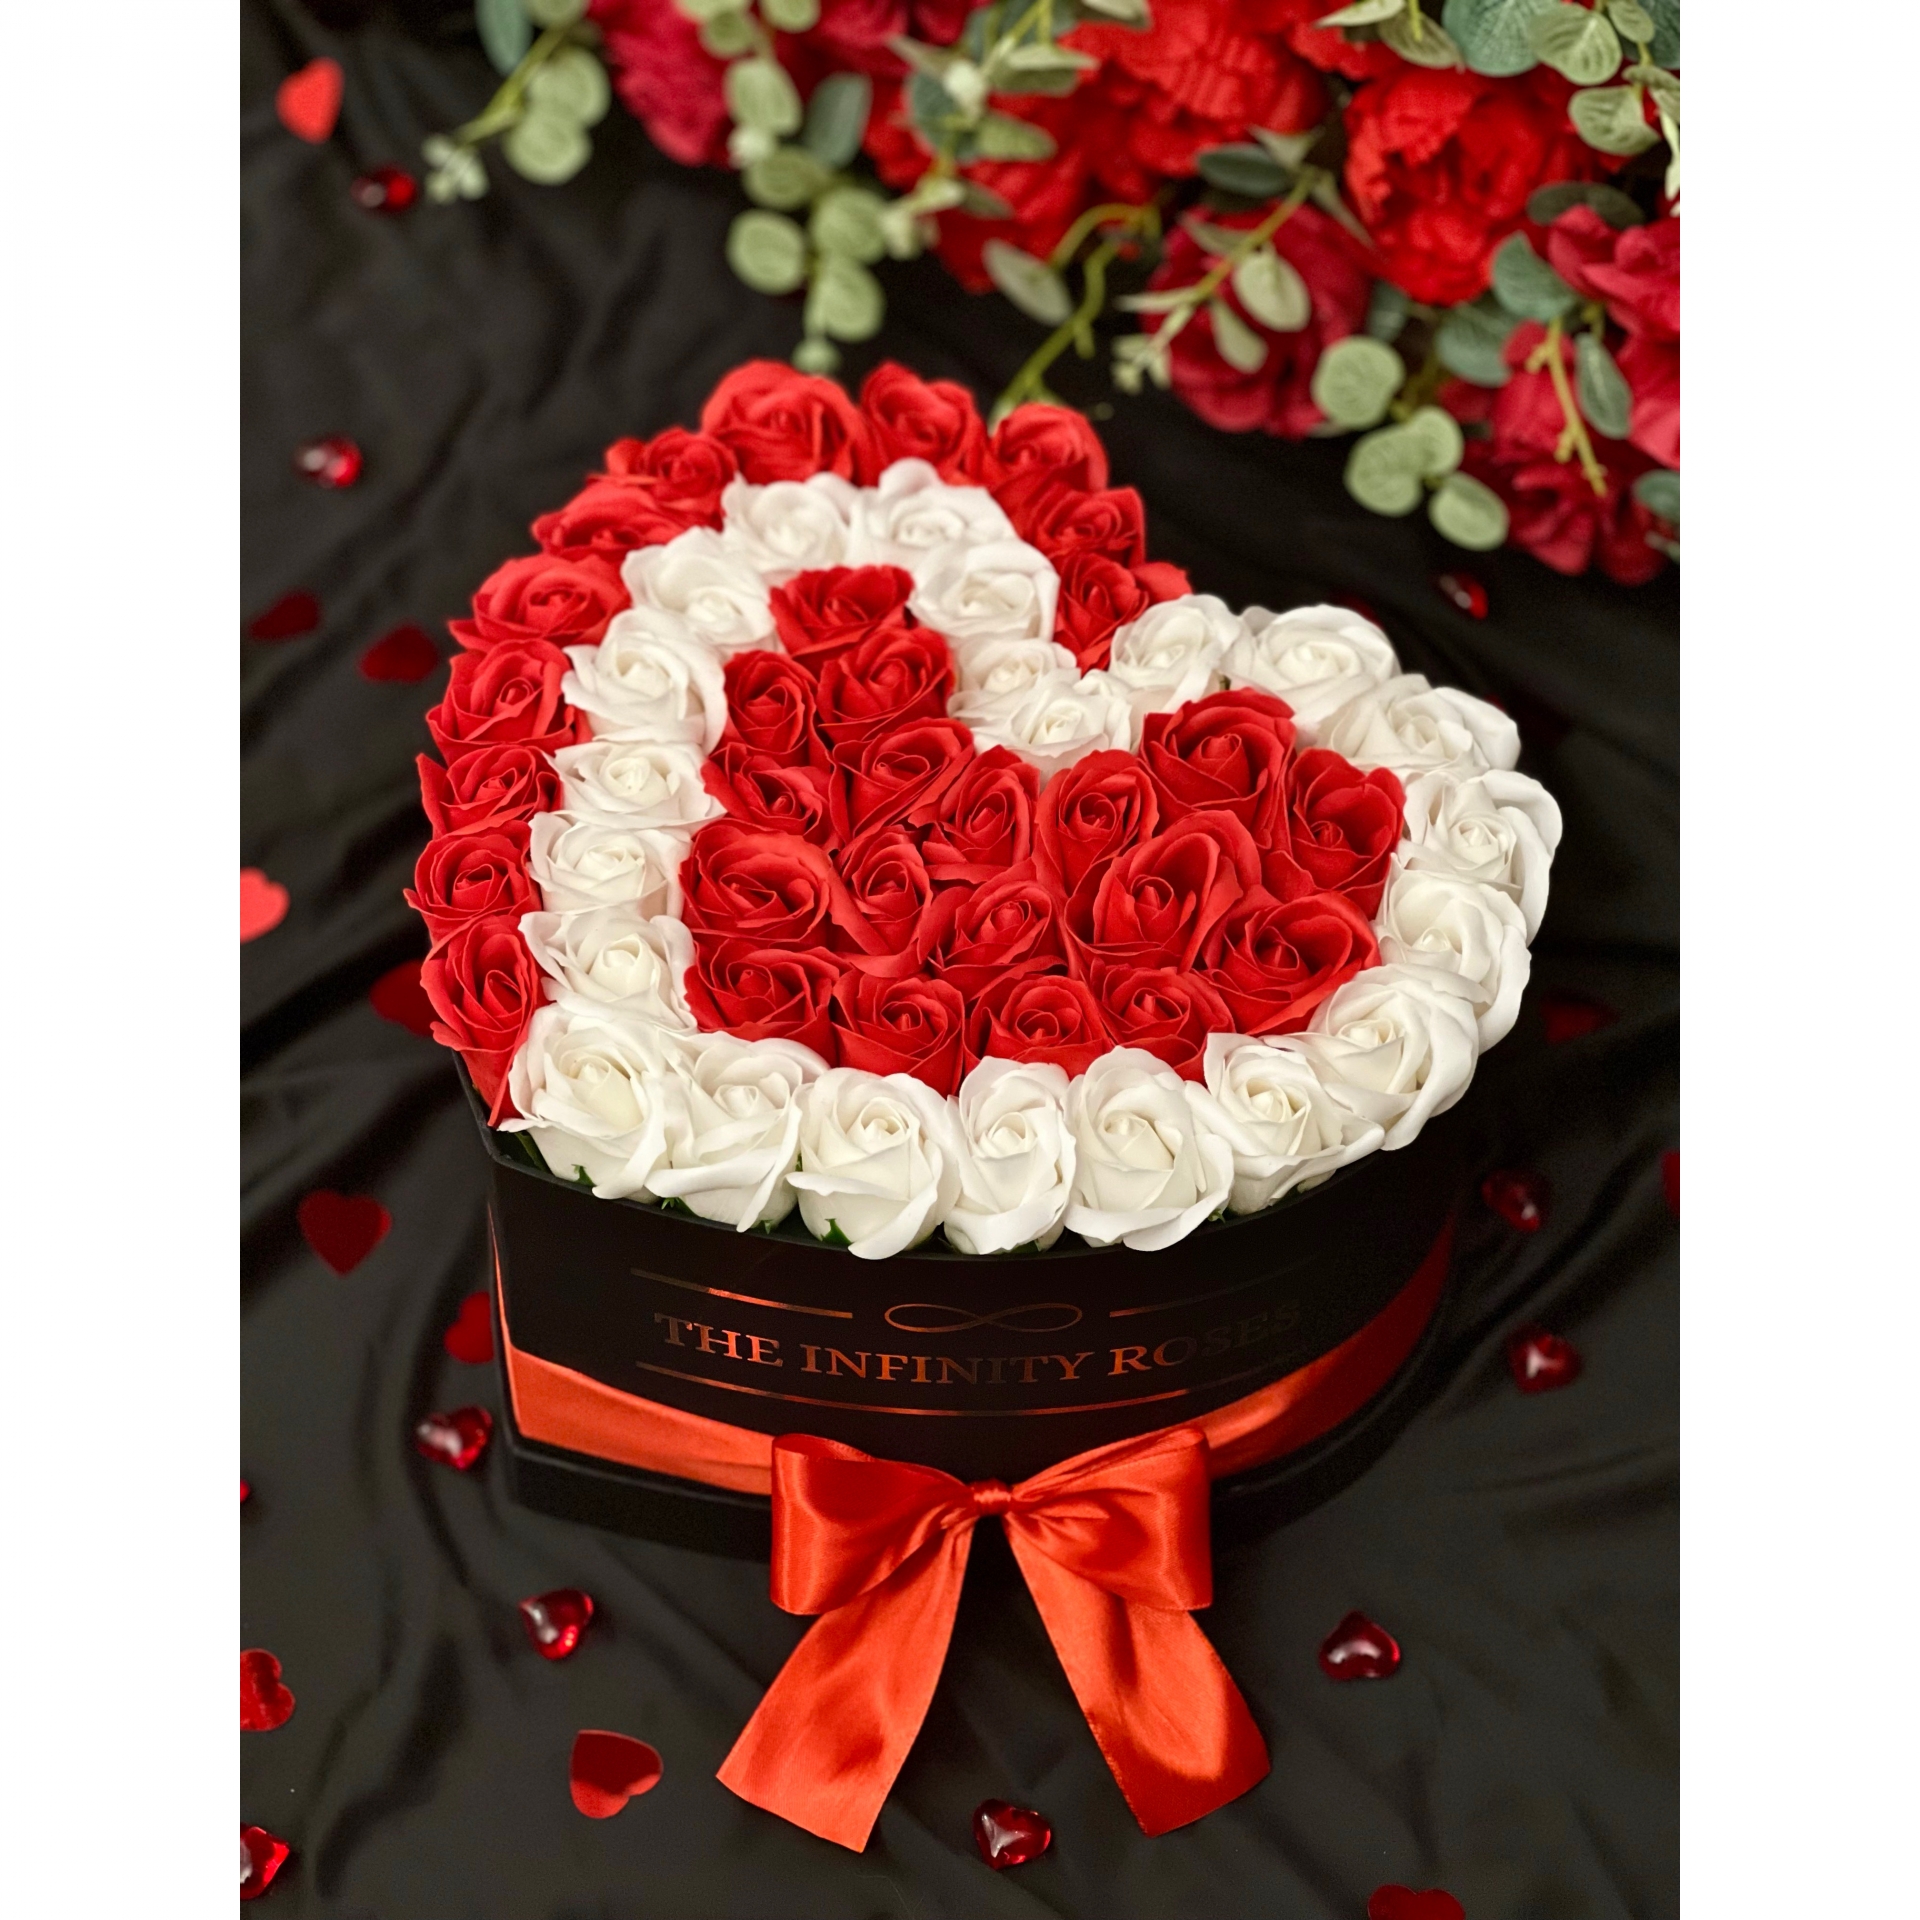 Aranjament floral in forma de inima cu 47-49 trandafiri-editie speciala Valentine’s Day